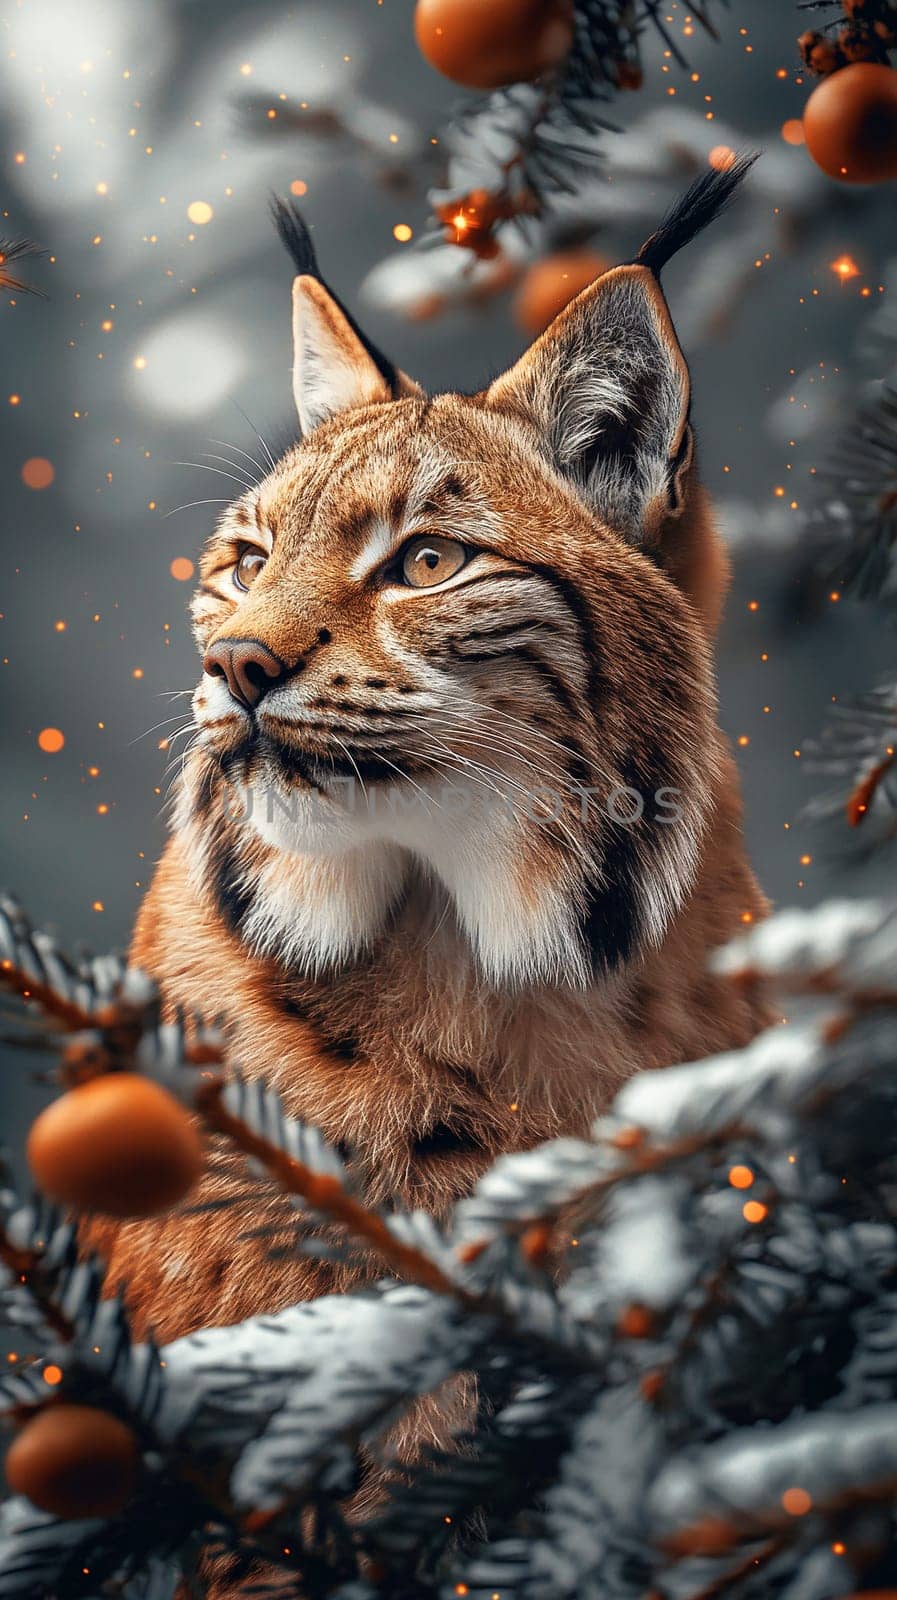 A wild eurasian lynx in nature near a christmas tree